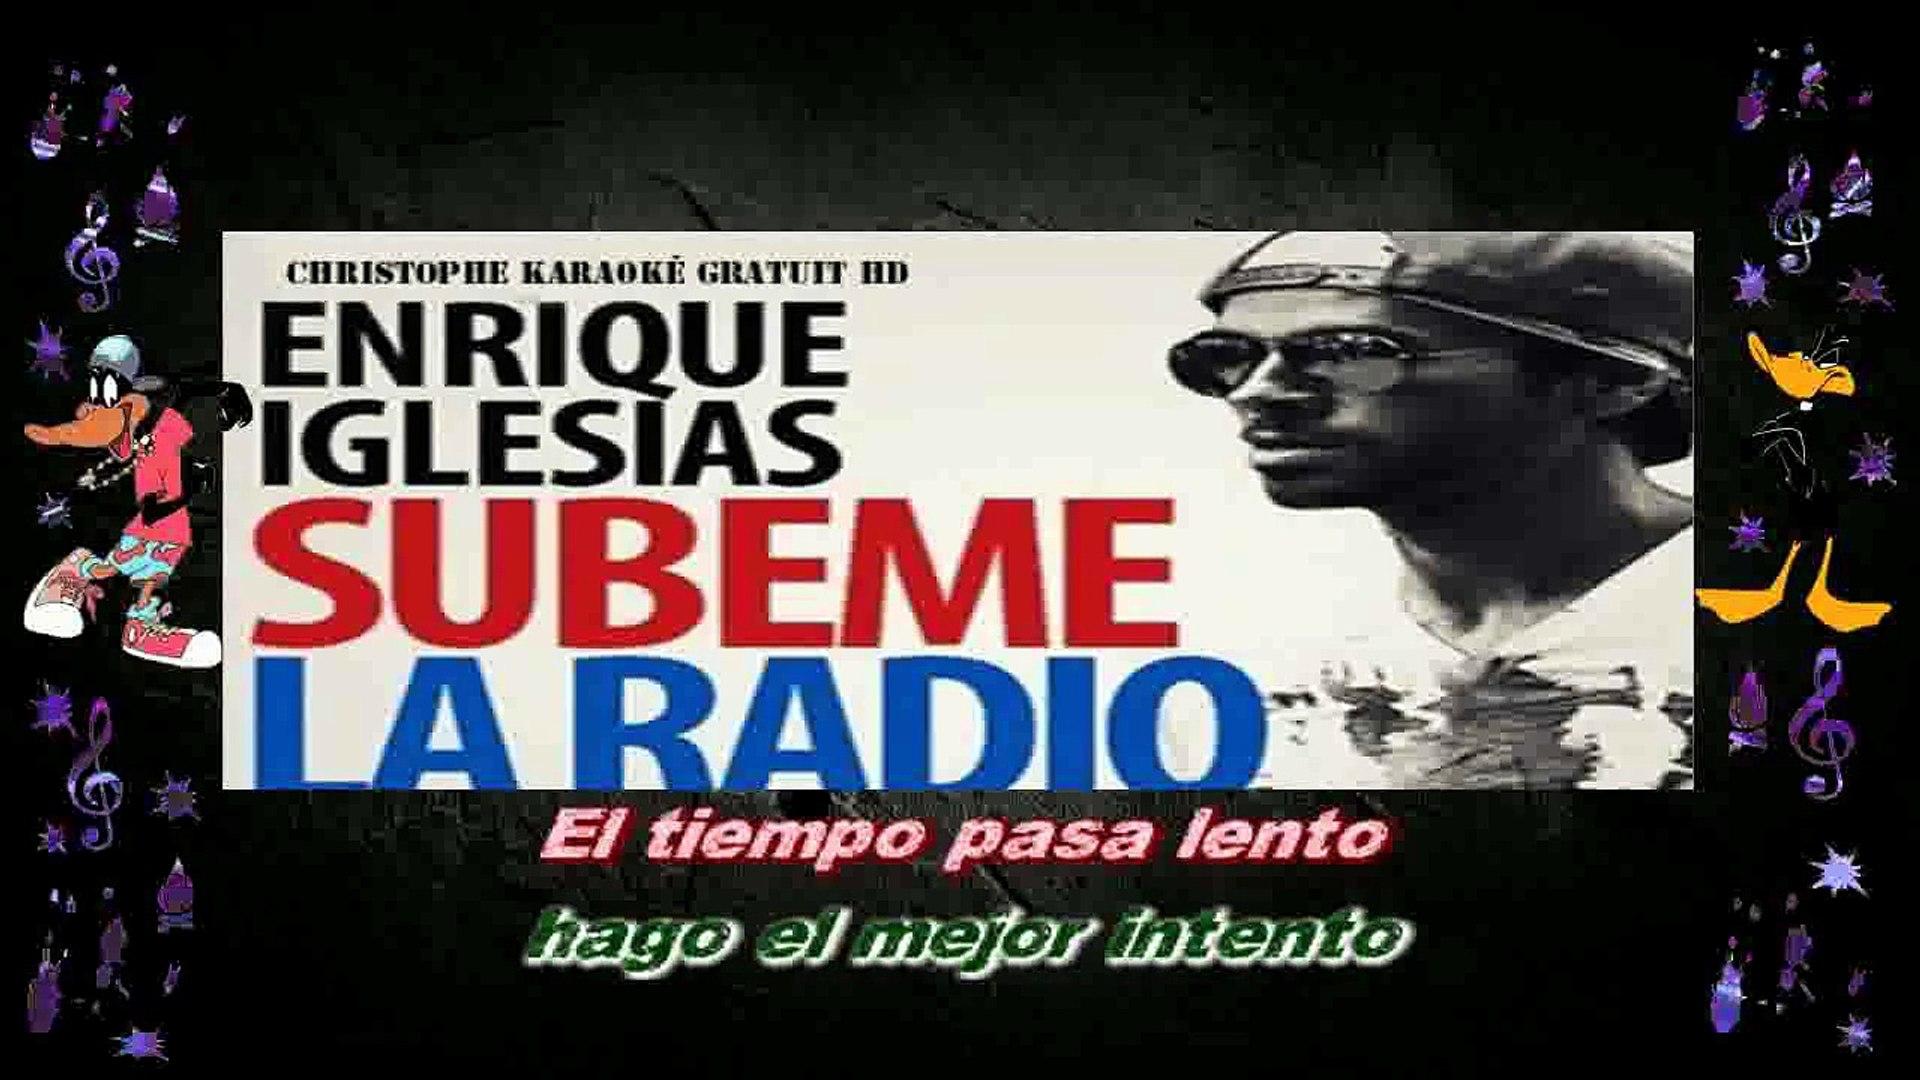 Enrique Iglesias Feat Zion & Lennox & Descemer Bueno - Súbeme la radio  KARAOKE / INSTRUMENTAL - Vidéo Dailymotion